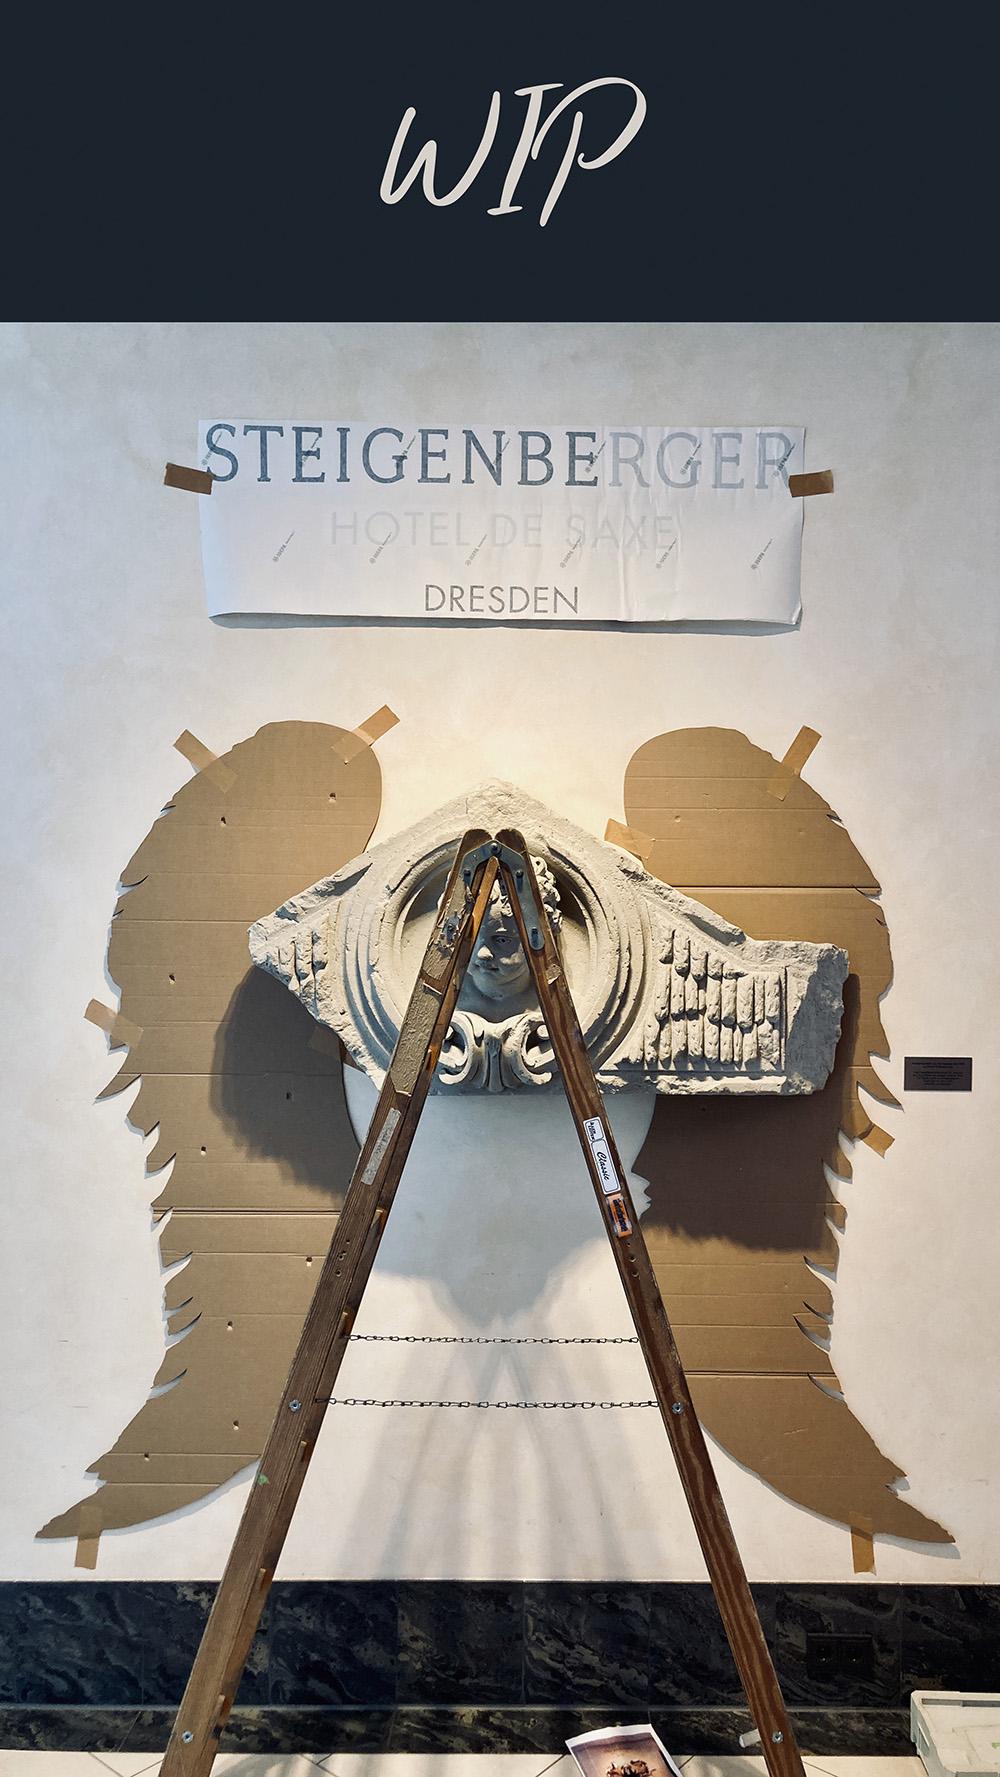 Steigenberger Wip